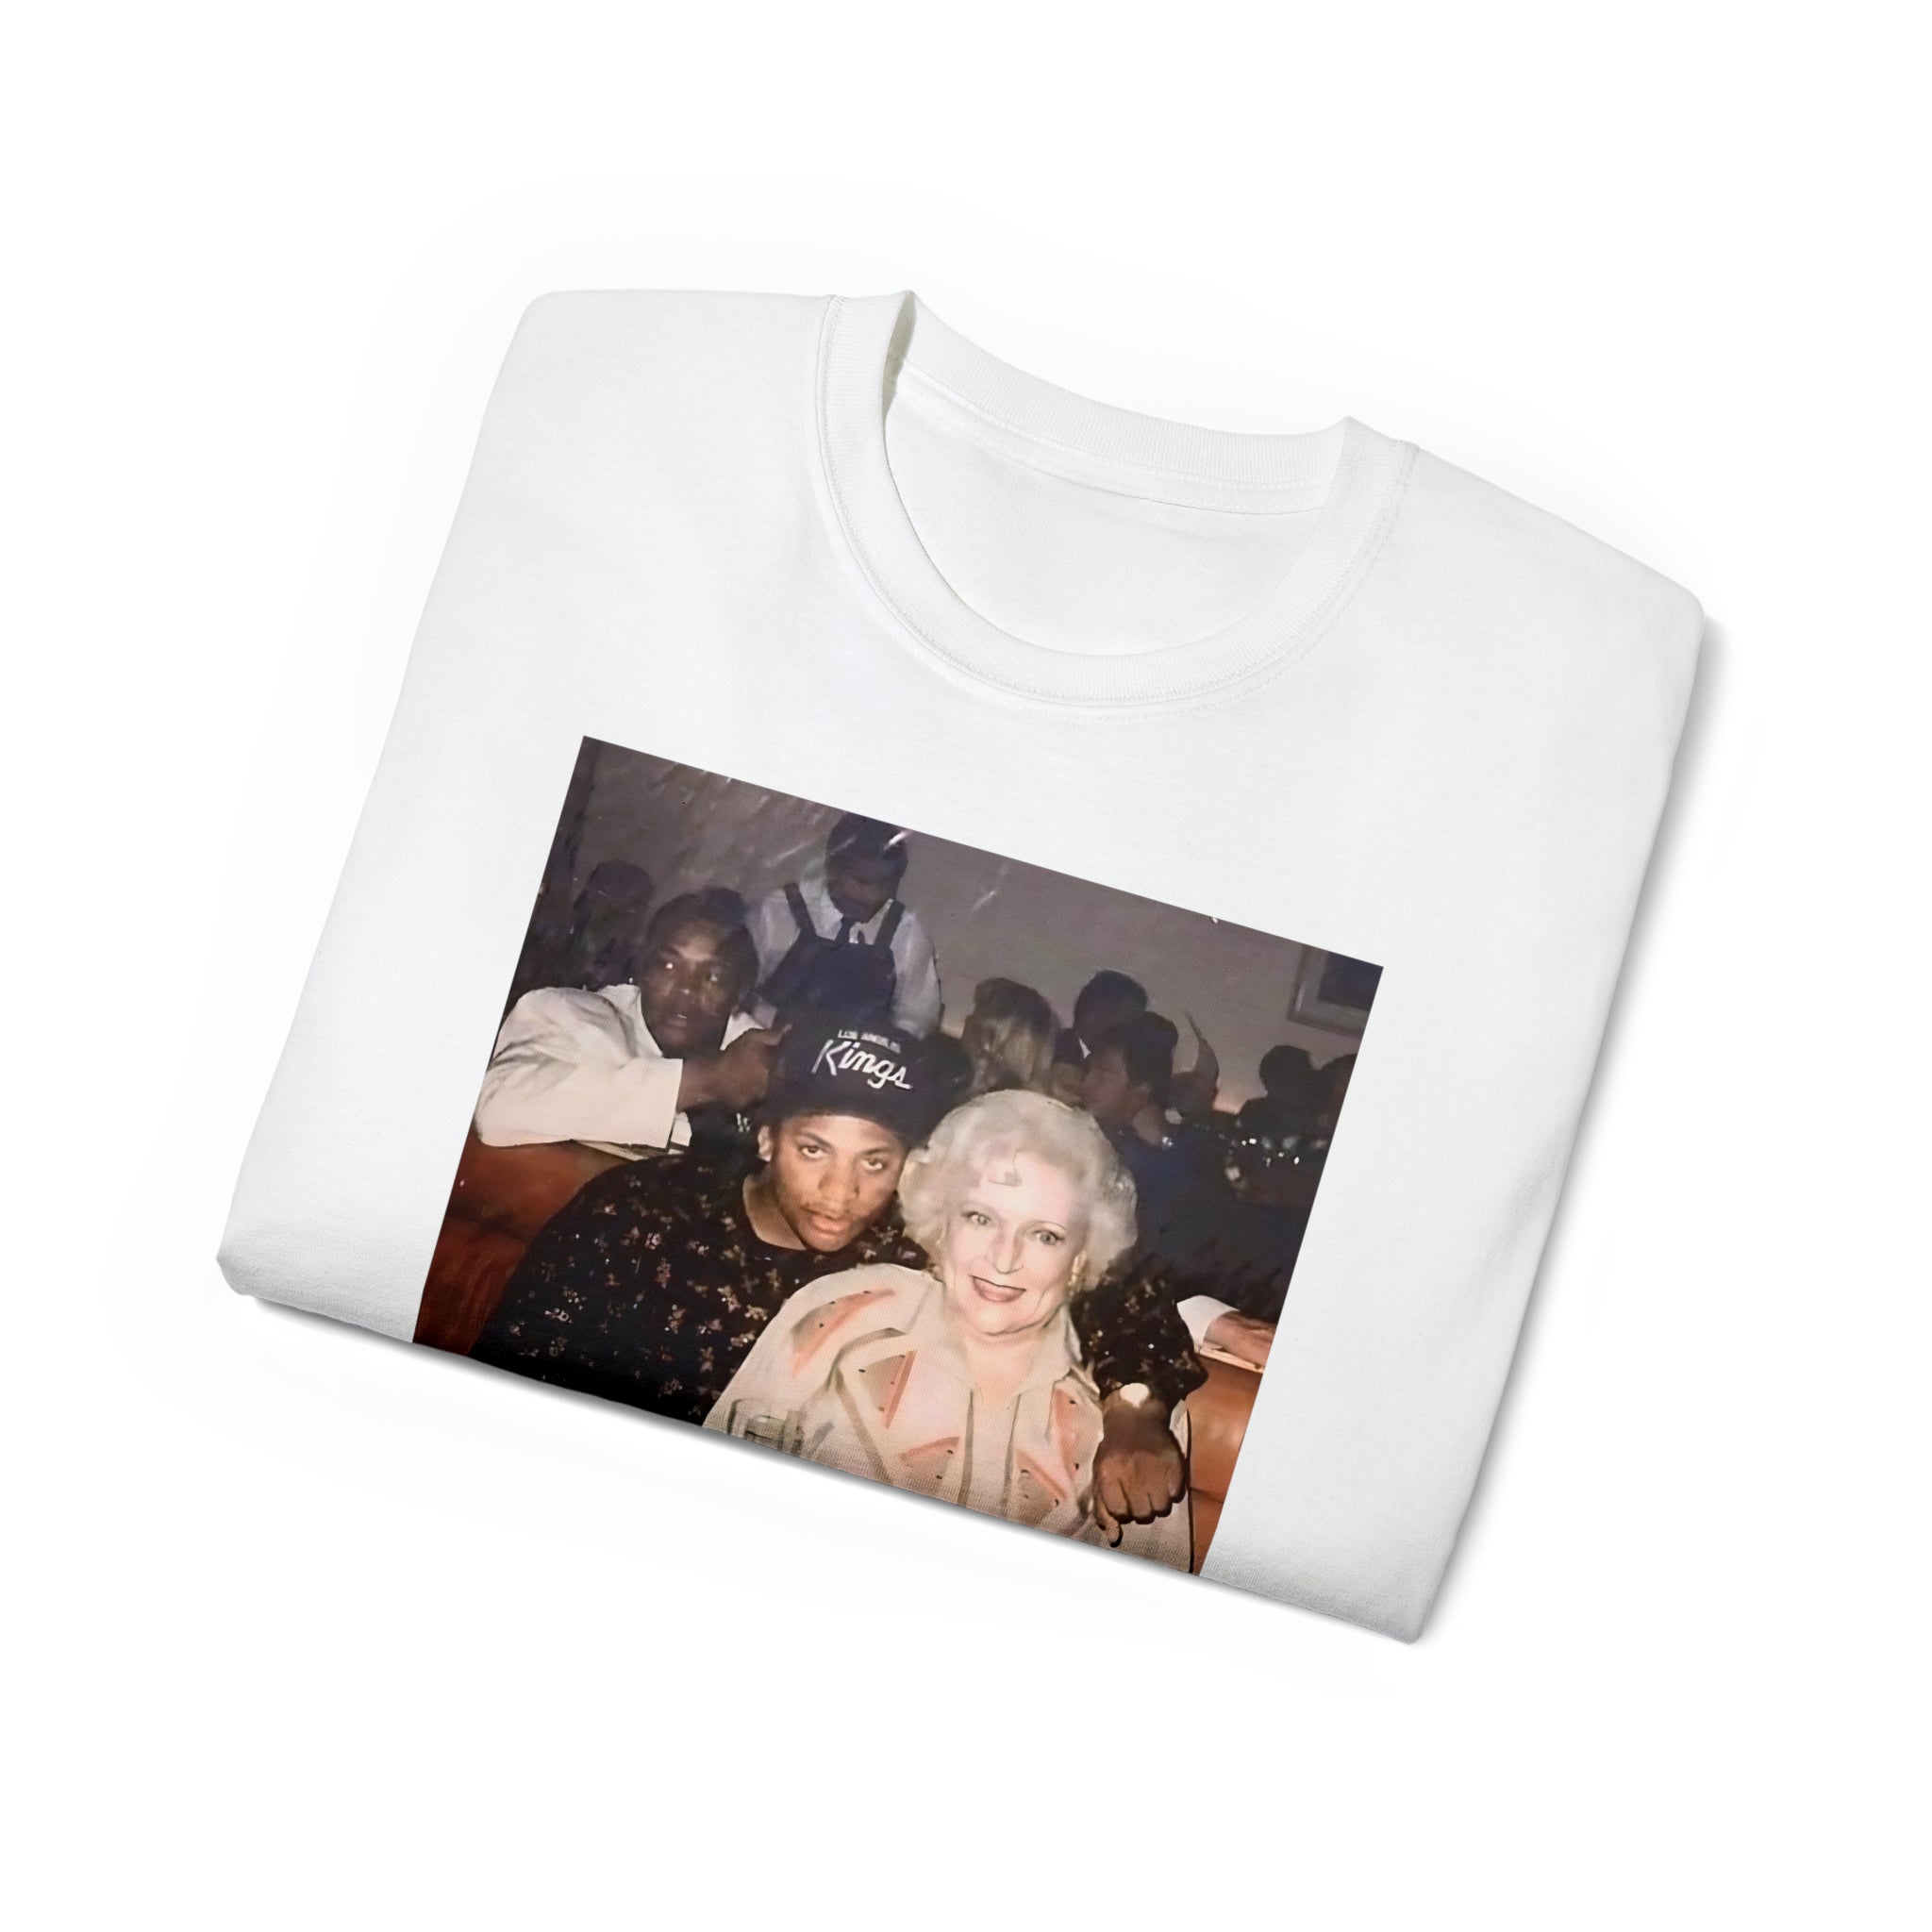 Betty Golden Eazy E Compton Mashup T-Shirt